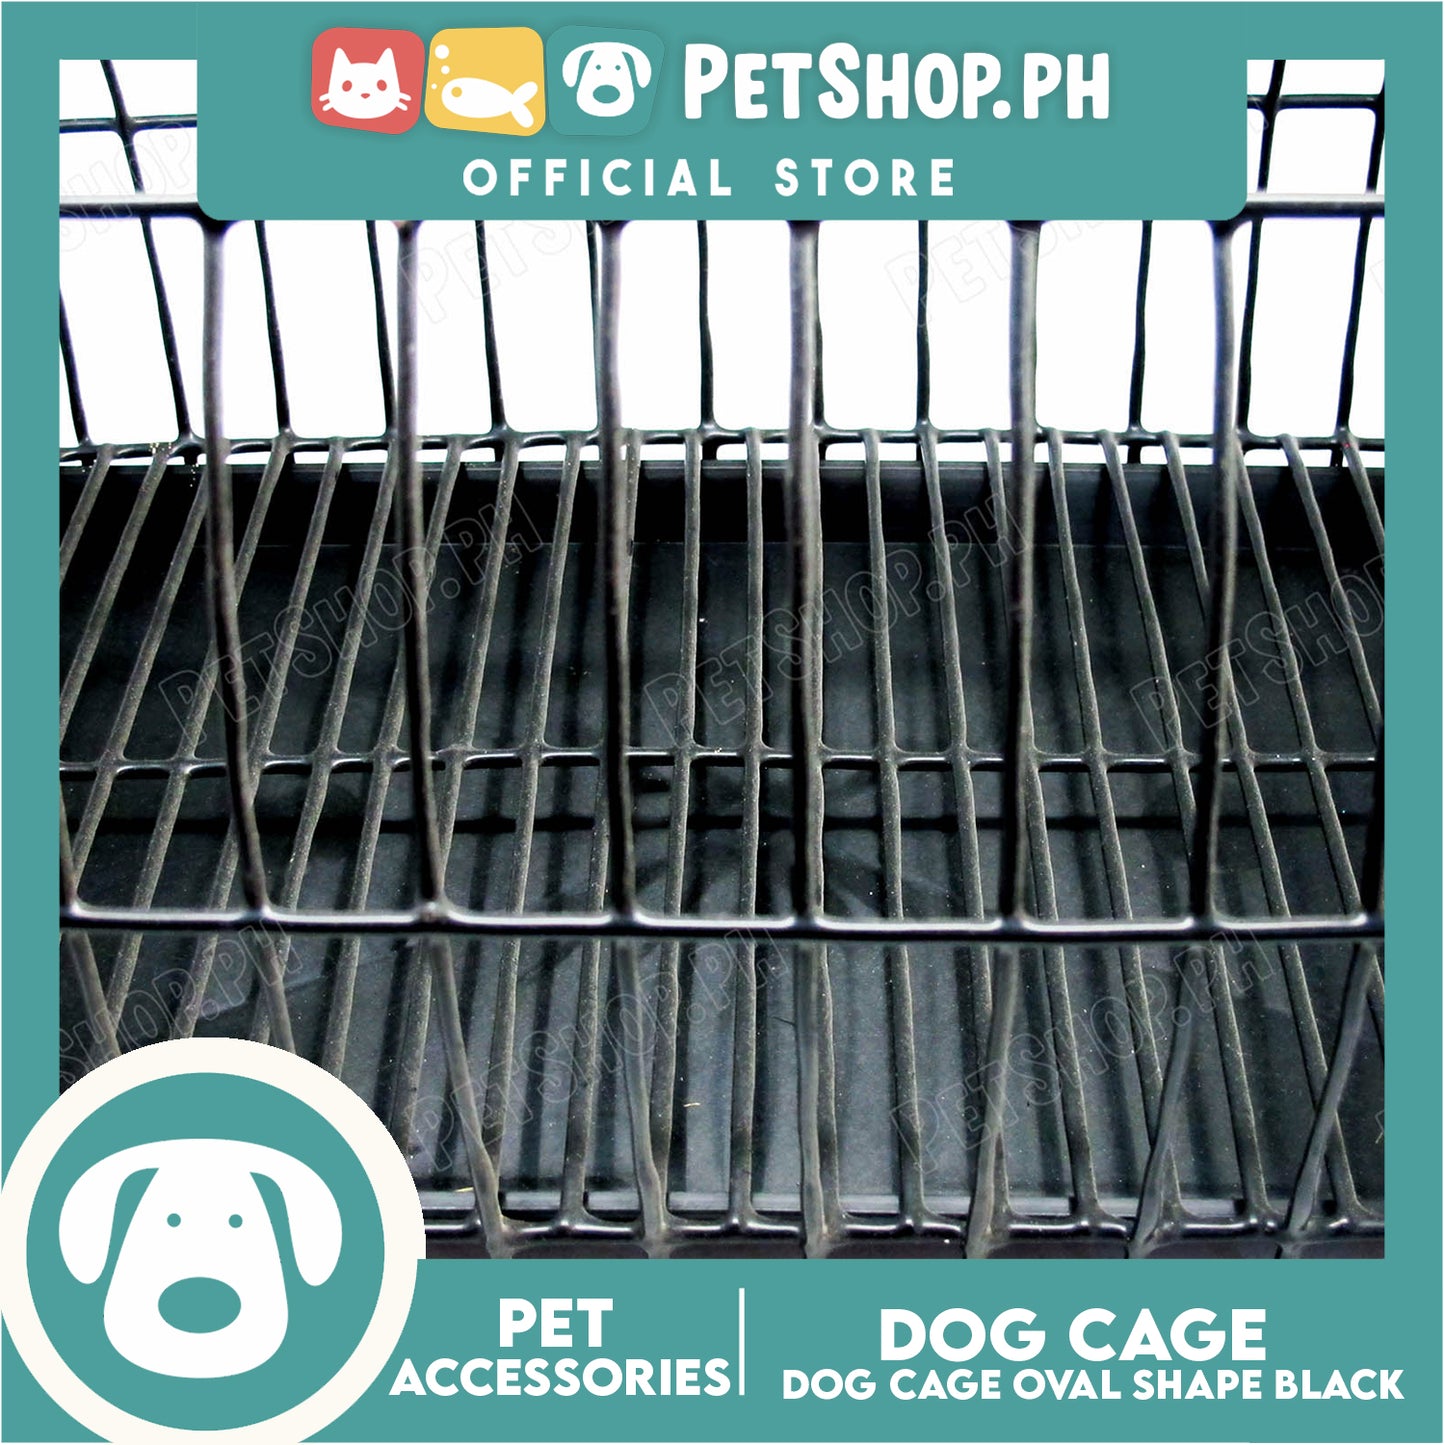 Dog Cage Medium Oval Black